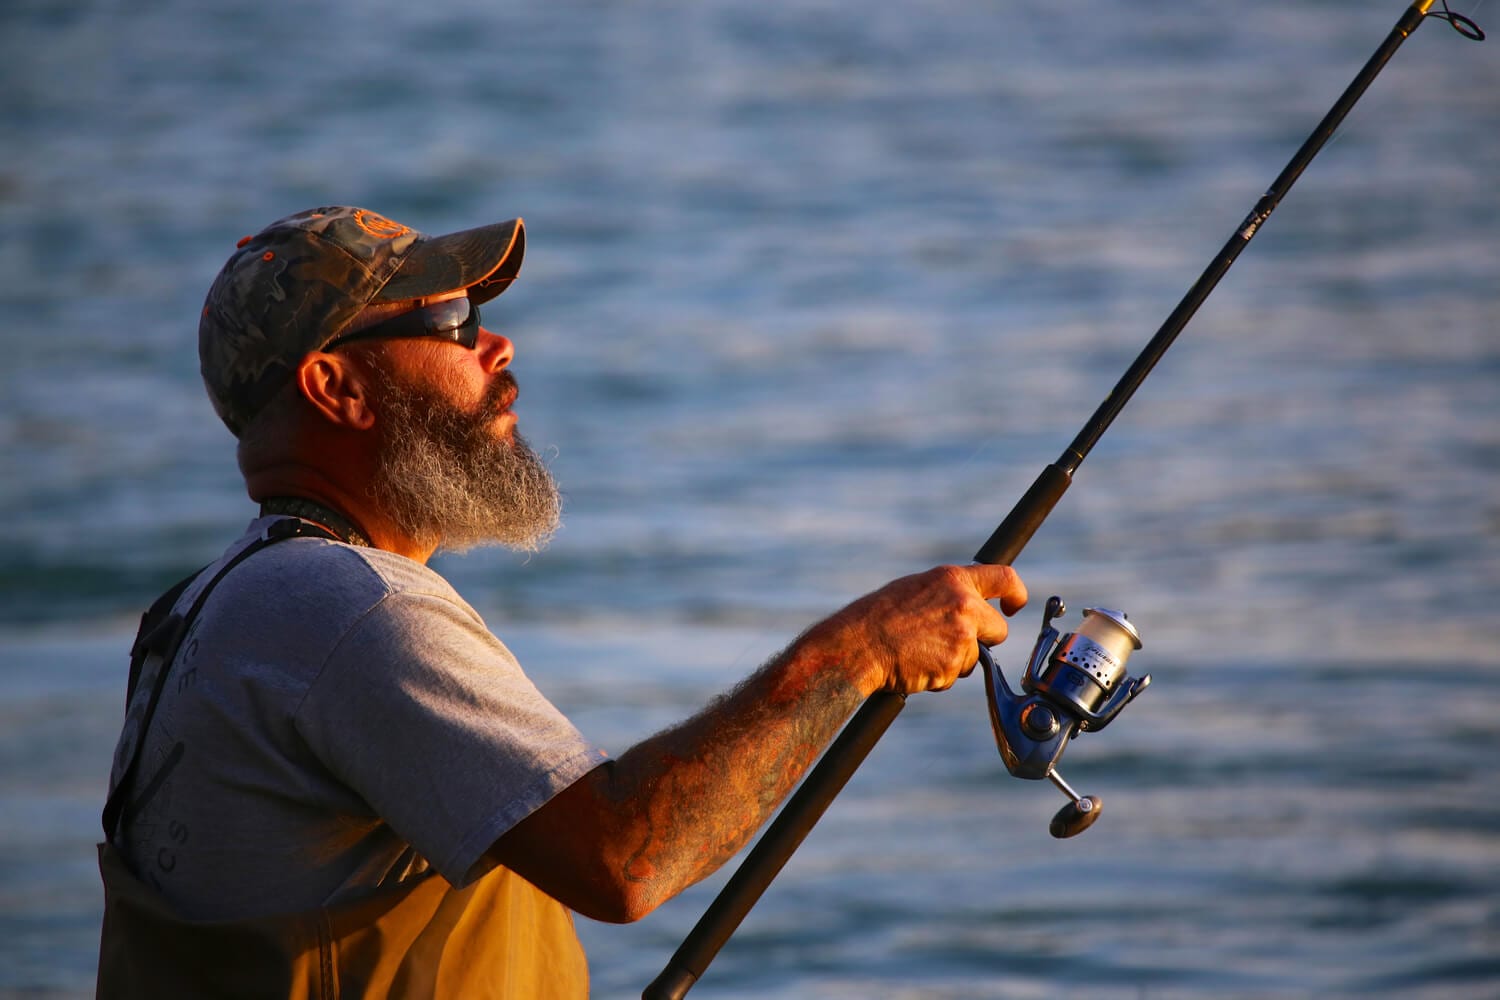 A seasoned fisherman examines his rig before casting on an Alaskan fishing trip.